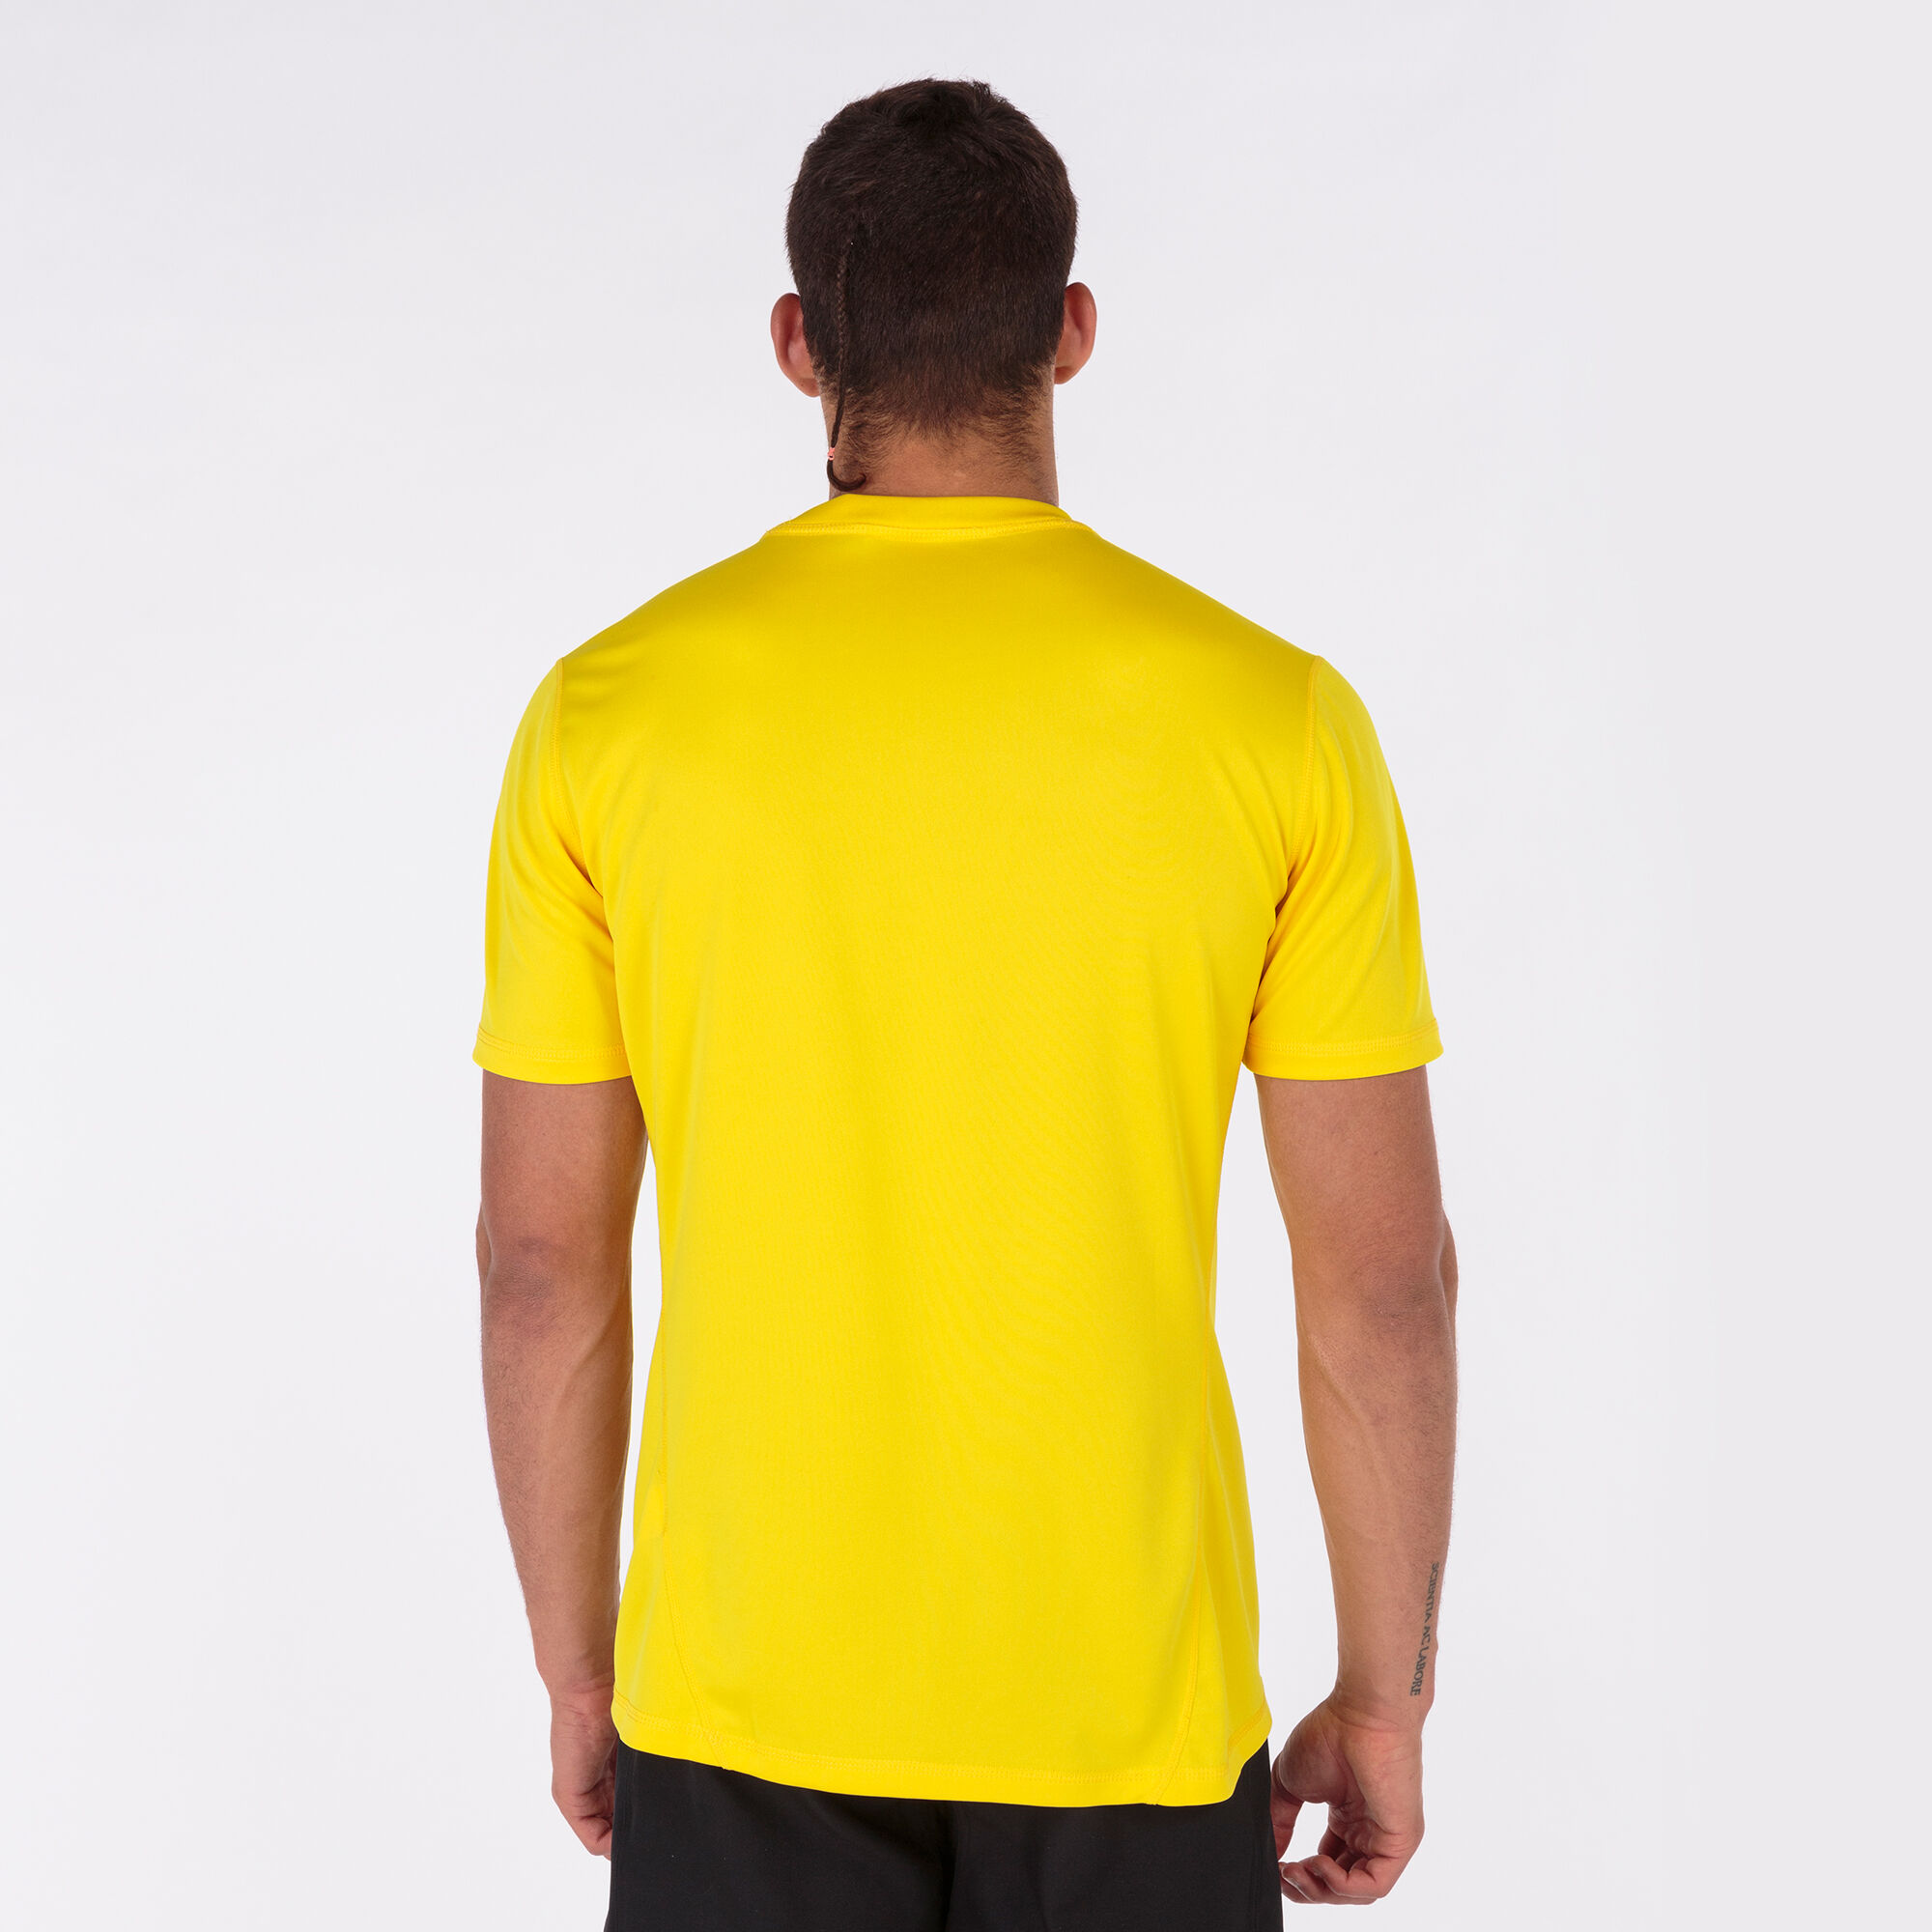 Camiseta manga corta hombre Strong amarillo